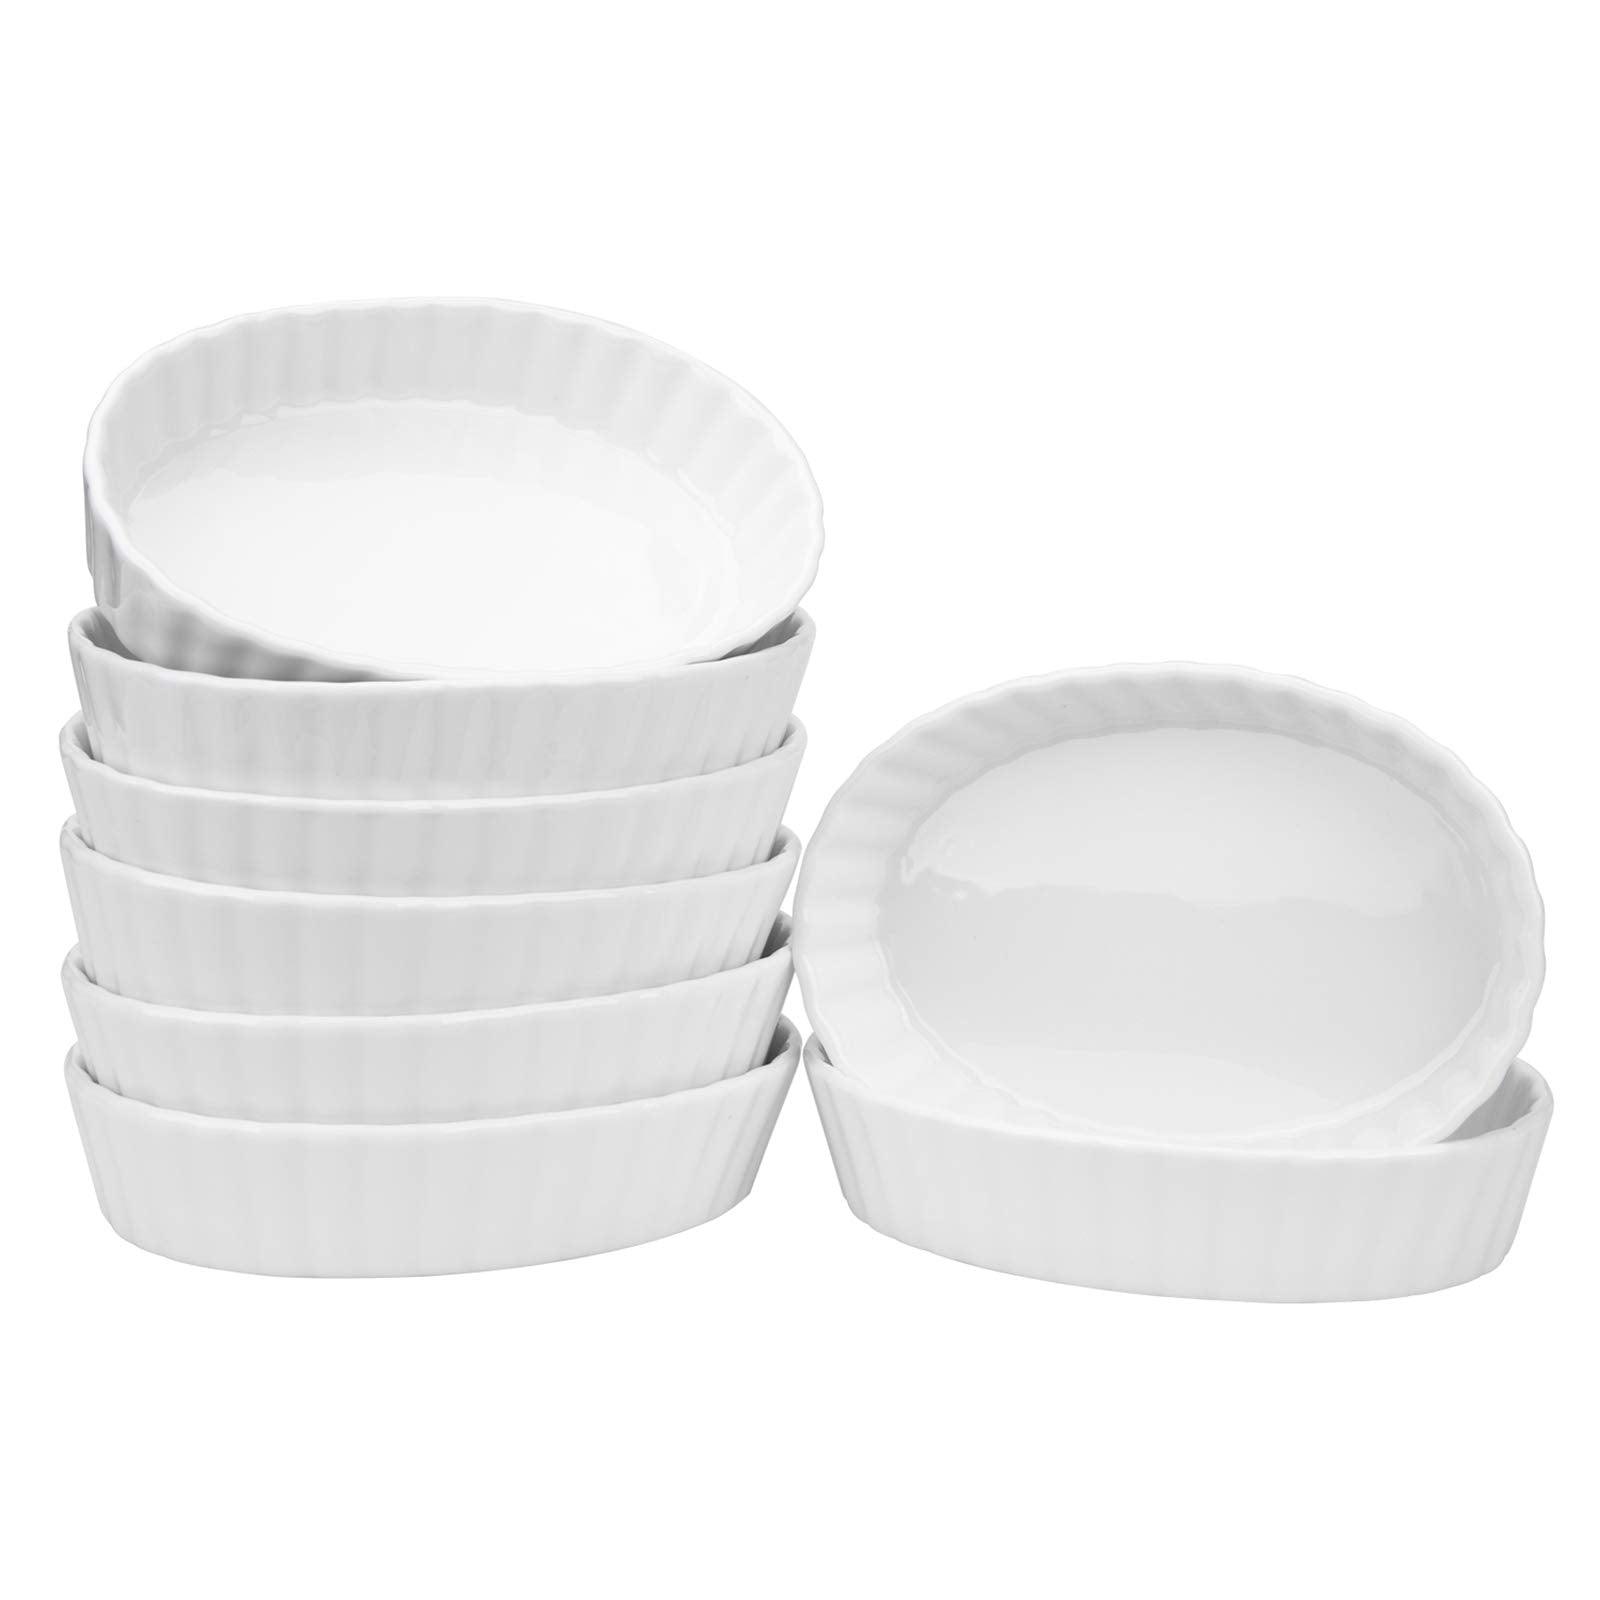 Foraineam Set of 8 Pieces Porcelain Ramekins, 6 Ounce Oval Creme Brulee Ramekin Dishes 6 x 4-1/4 x 1-1/4 Inch Baking Ramekins Set - CookCave